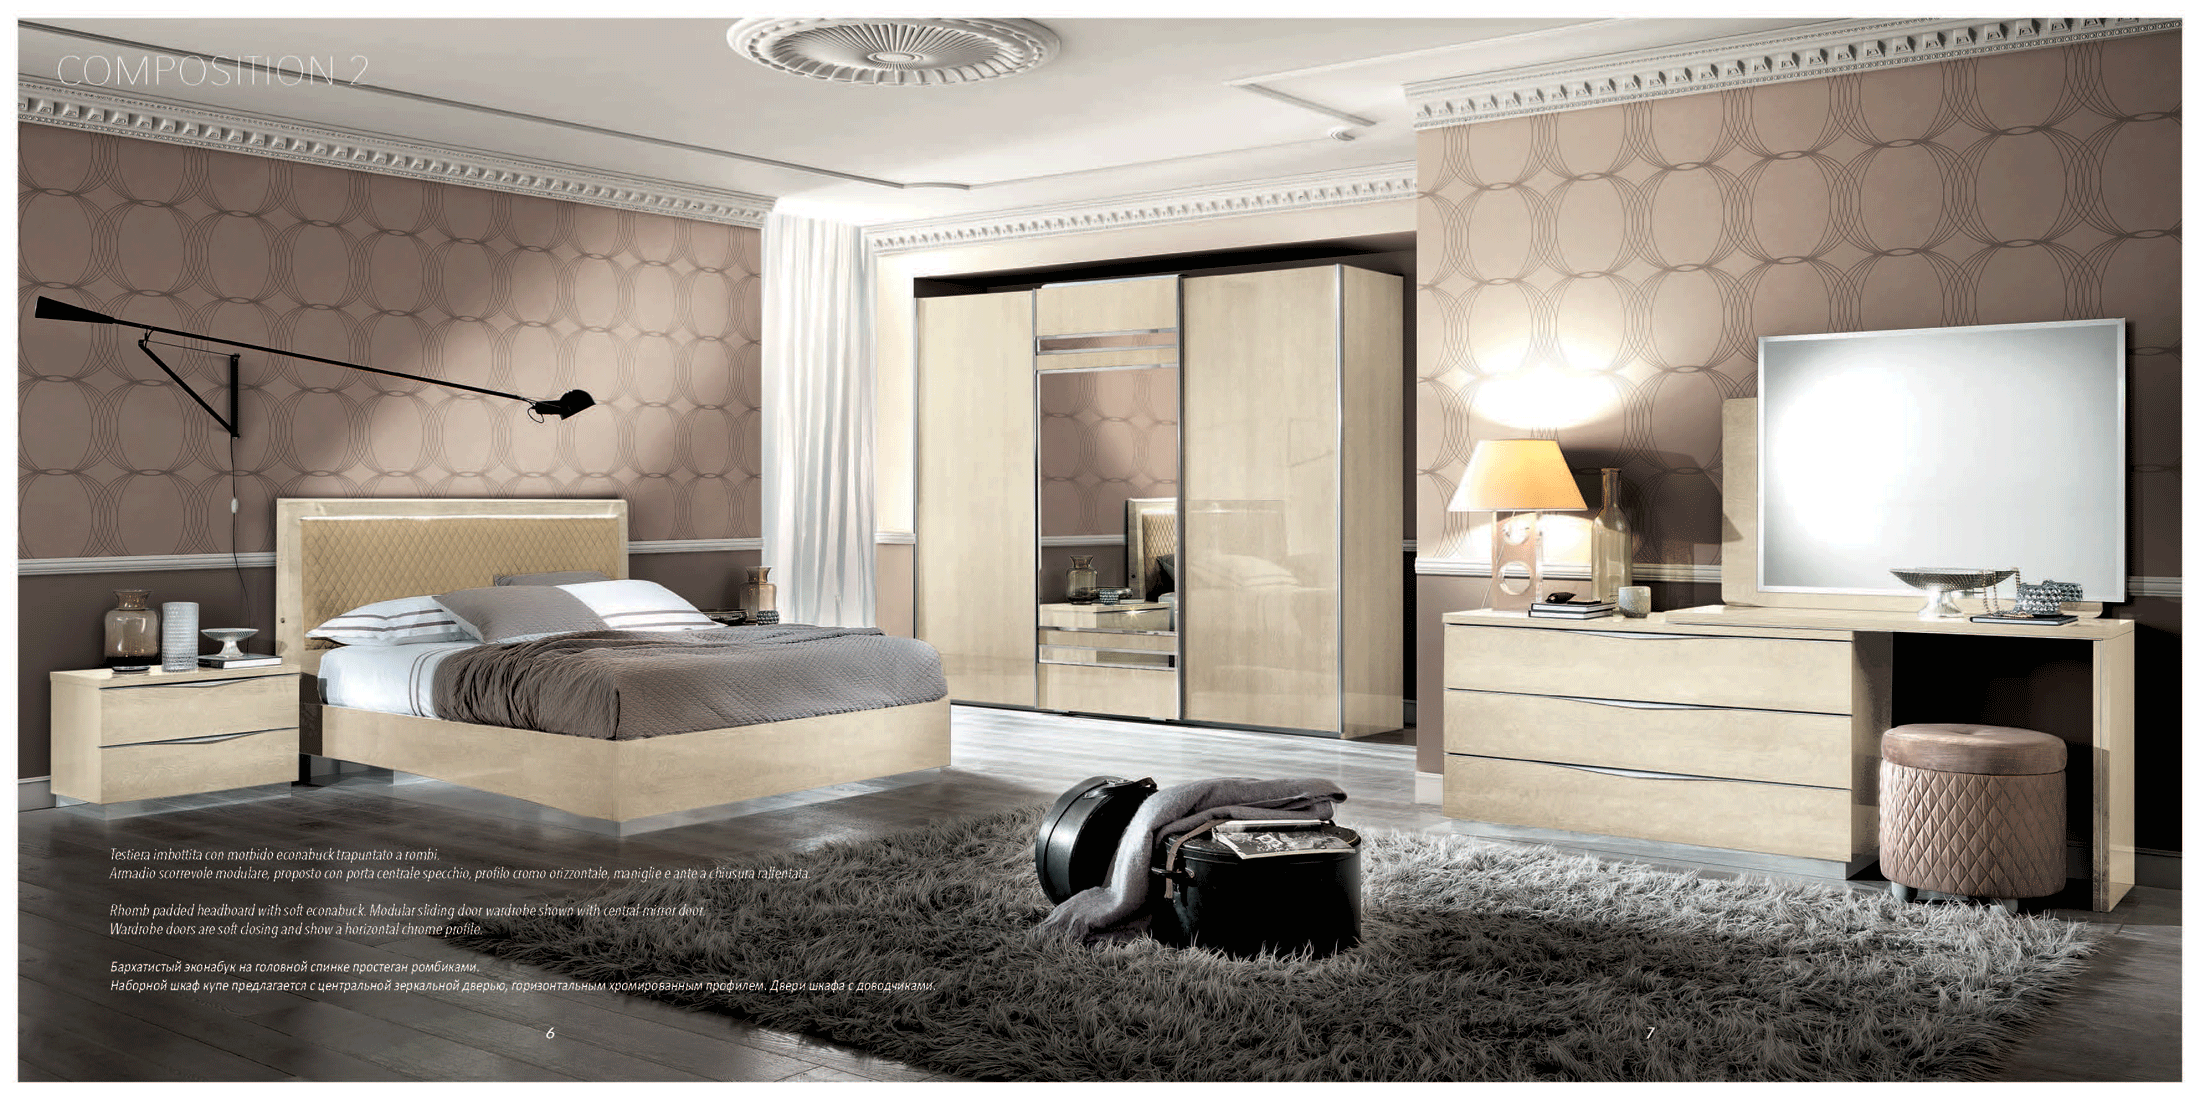 Bedroom Furniture Beds Platinum Additional Items IVORY BETULLIA SABBIA